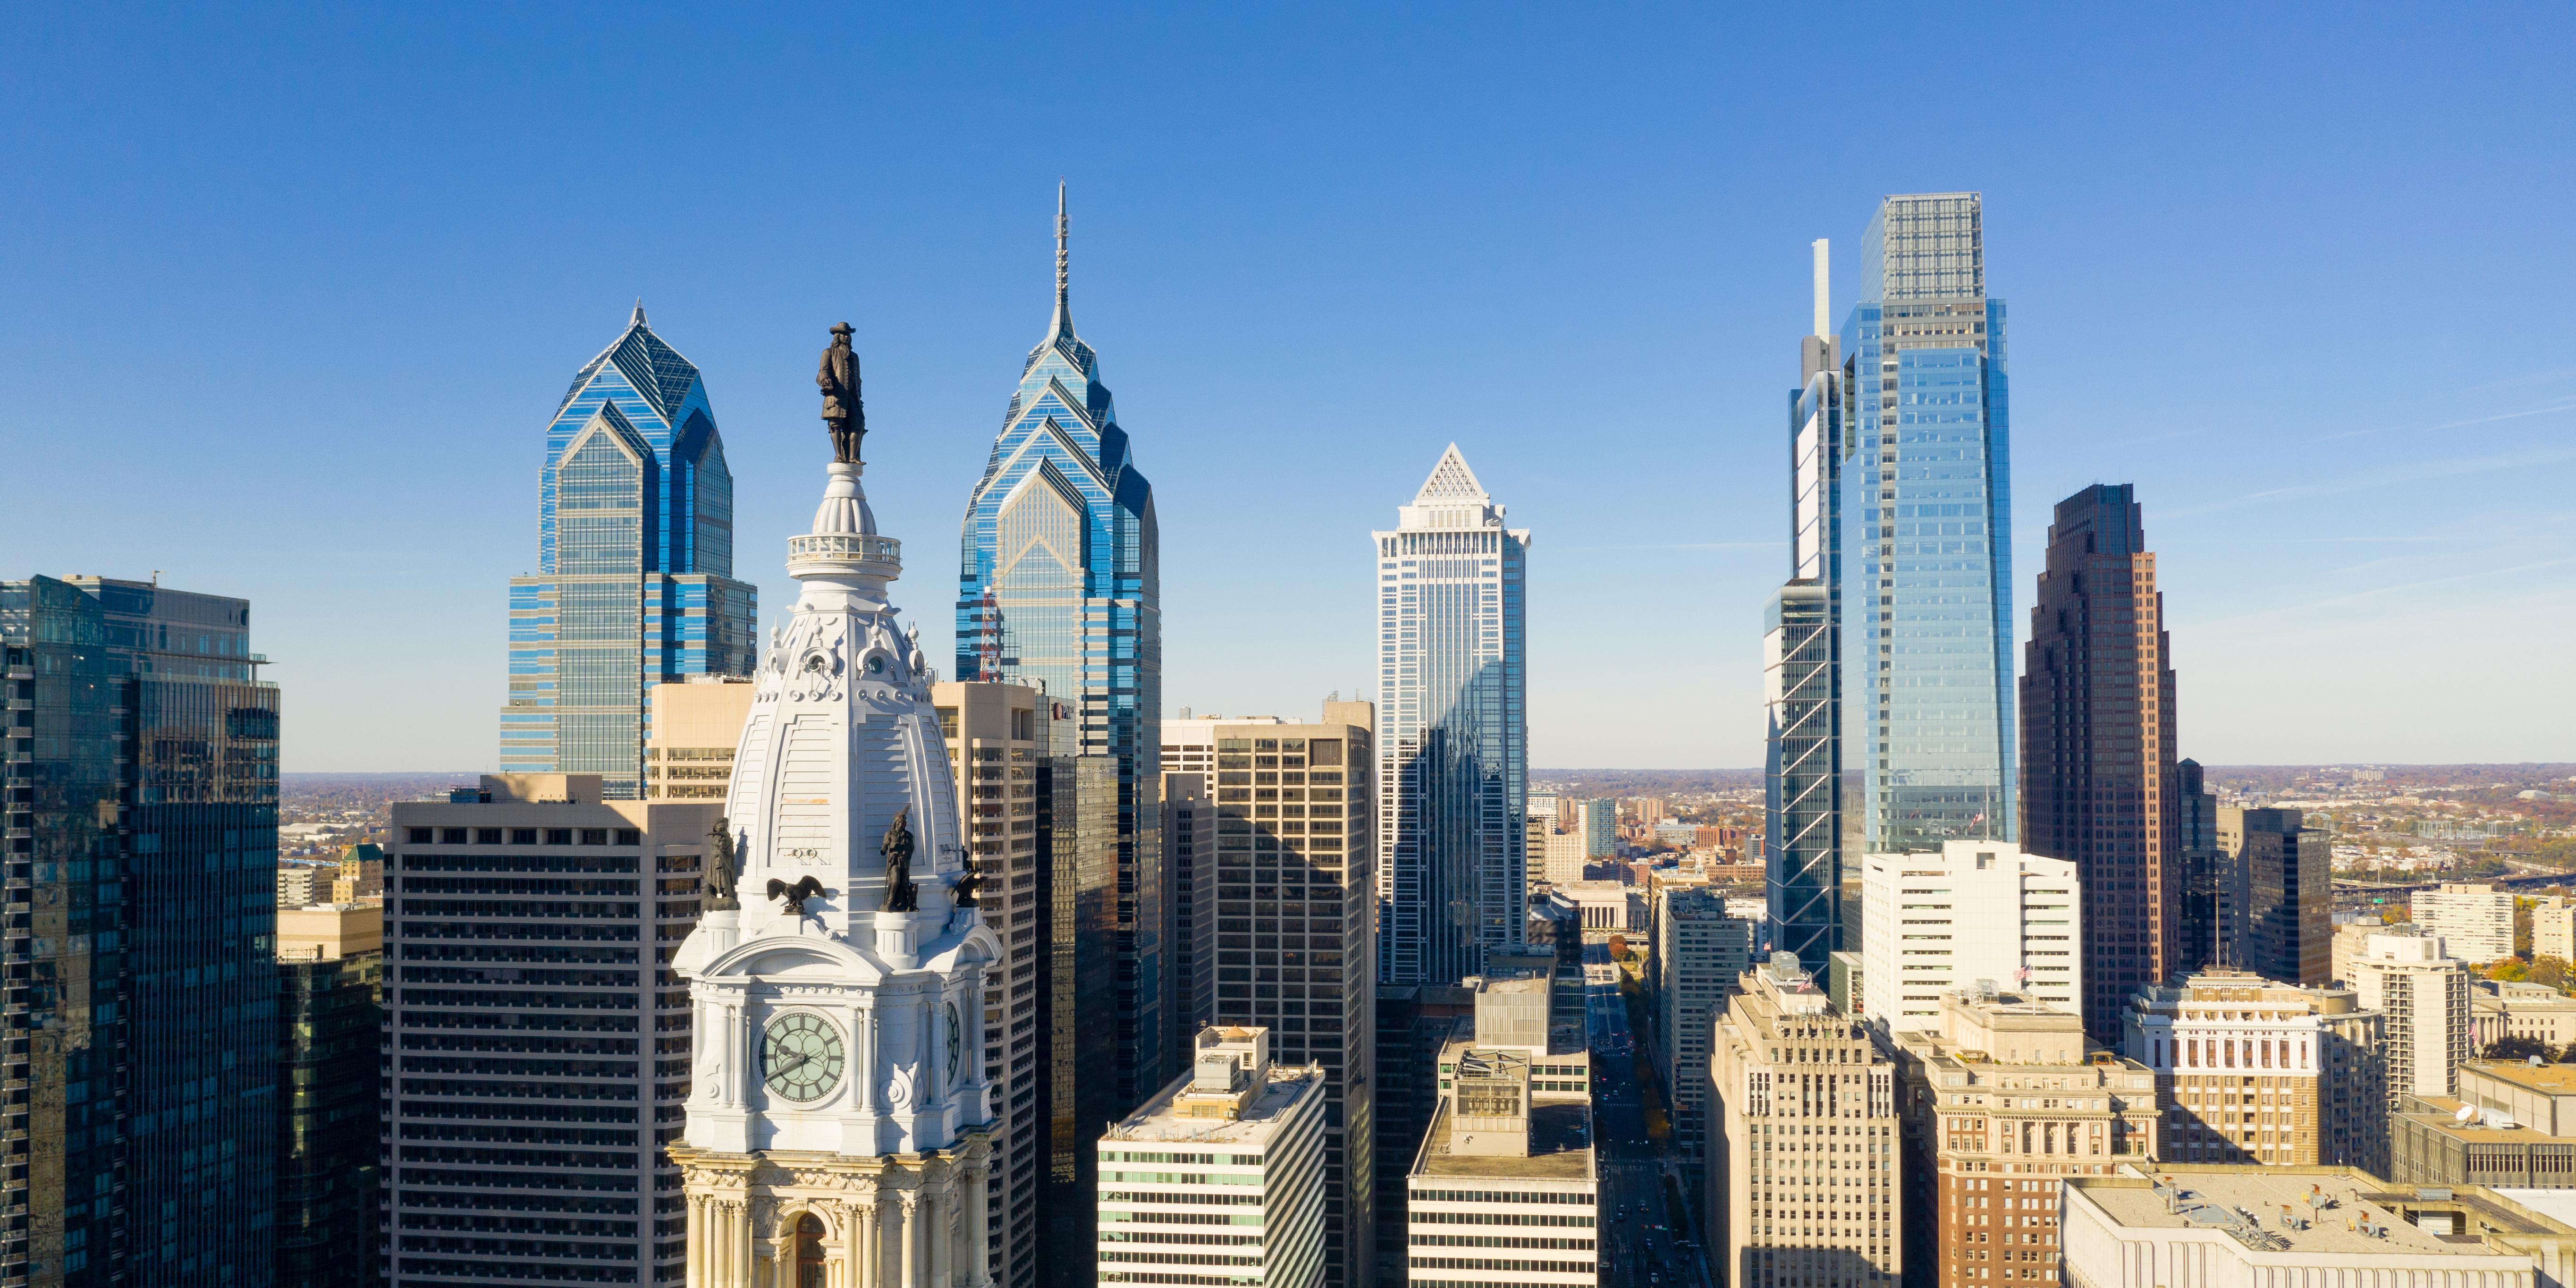 City Center, Philadelphia skyline